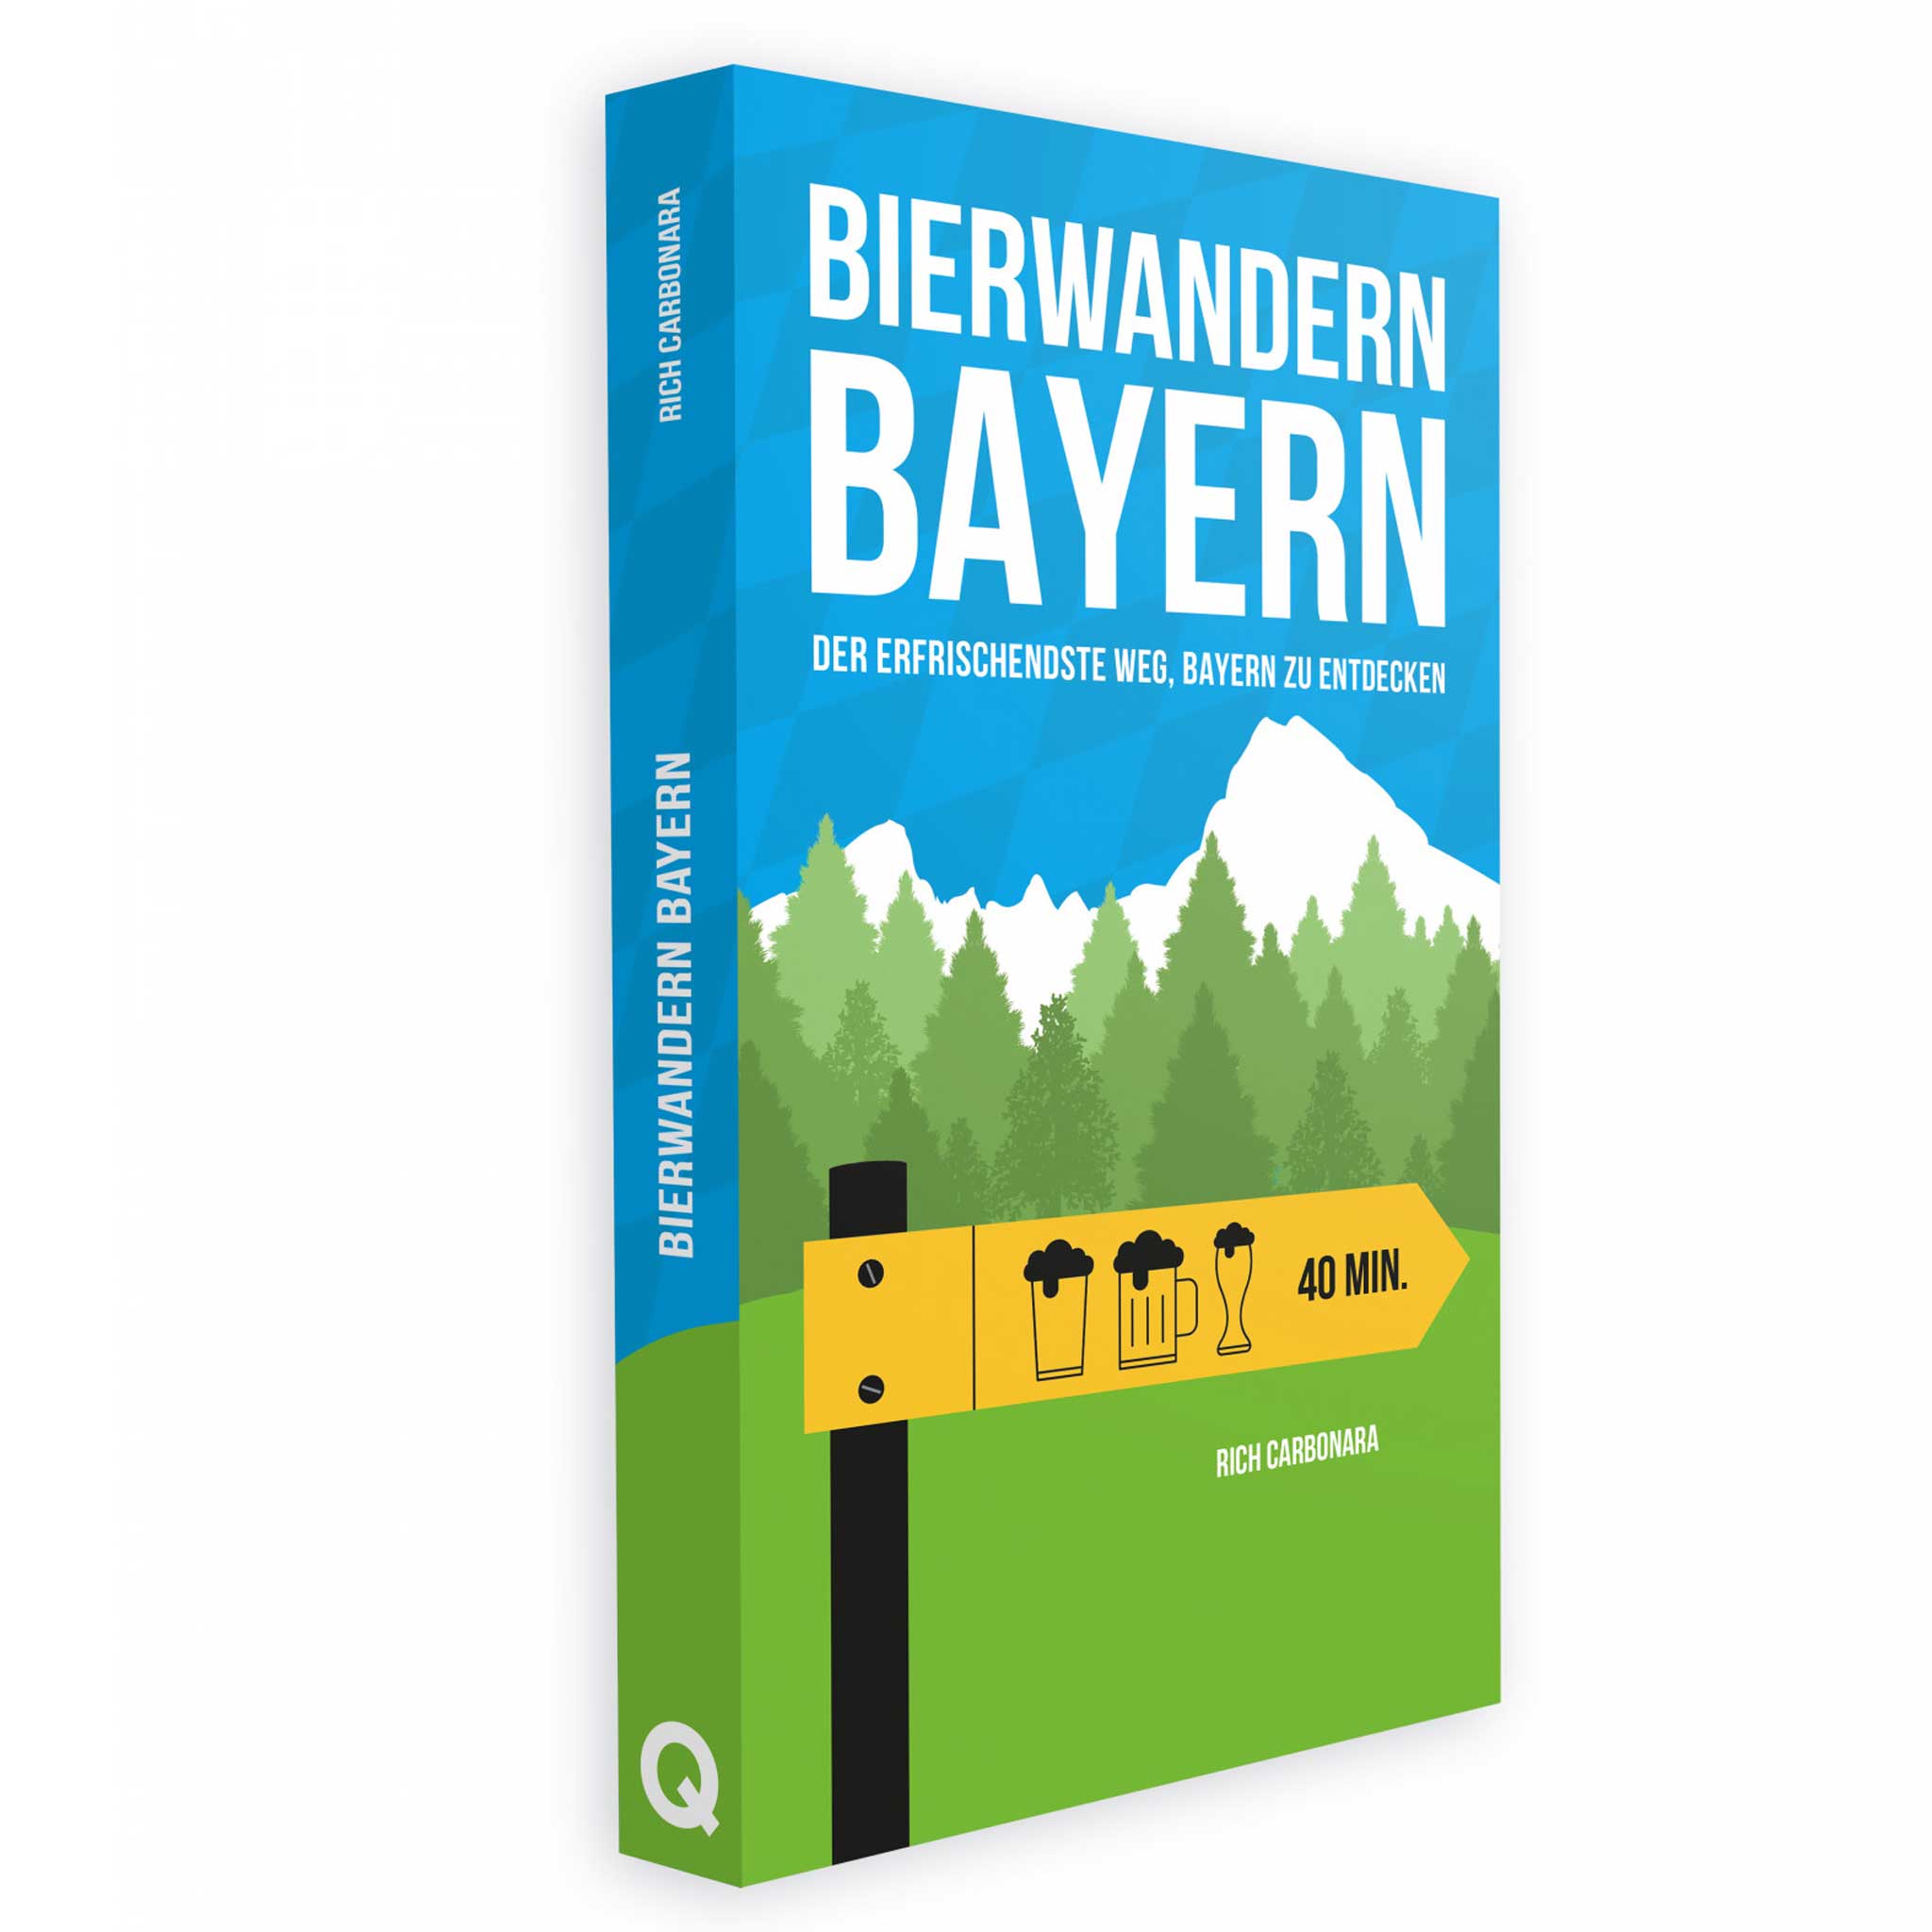 BIERWANDERN BAYERN | BIER- & REISEFÜHRER f. Bayern | Helvetiq - Charles & Marie